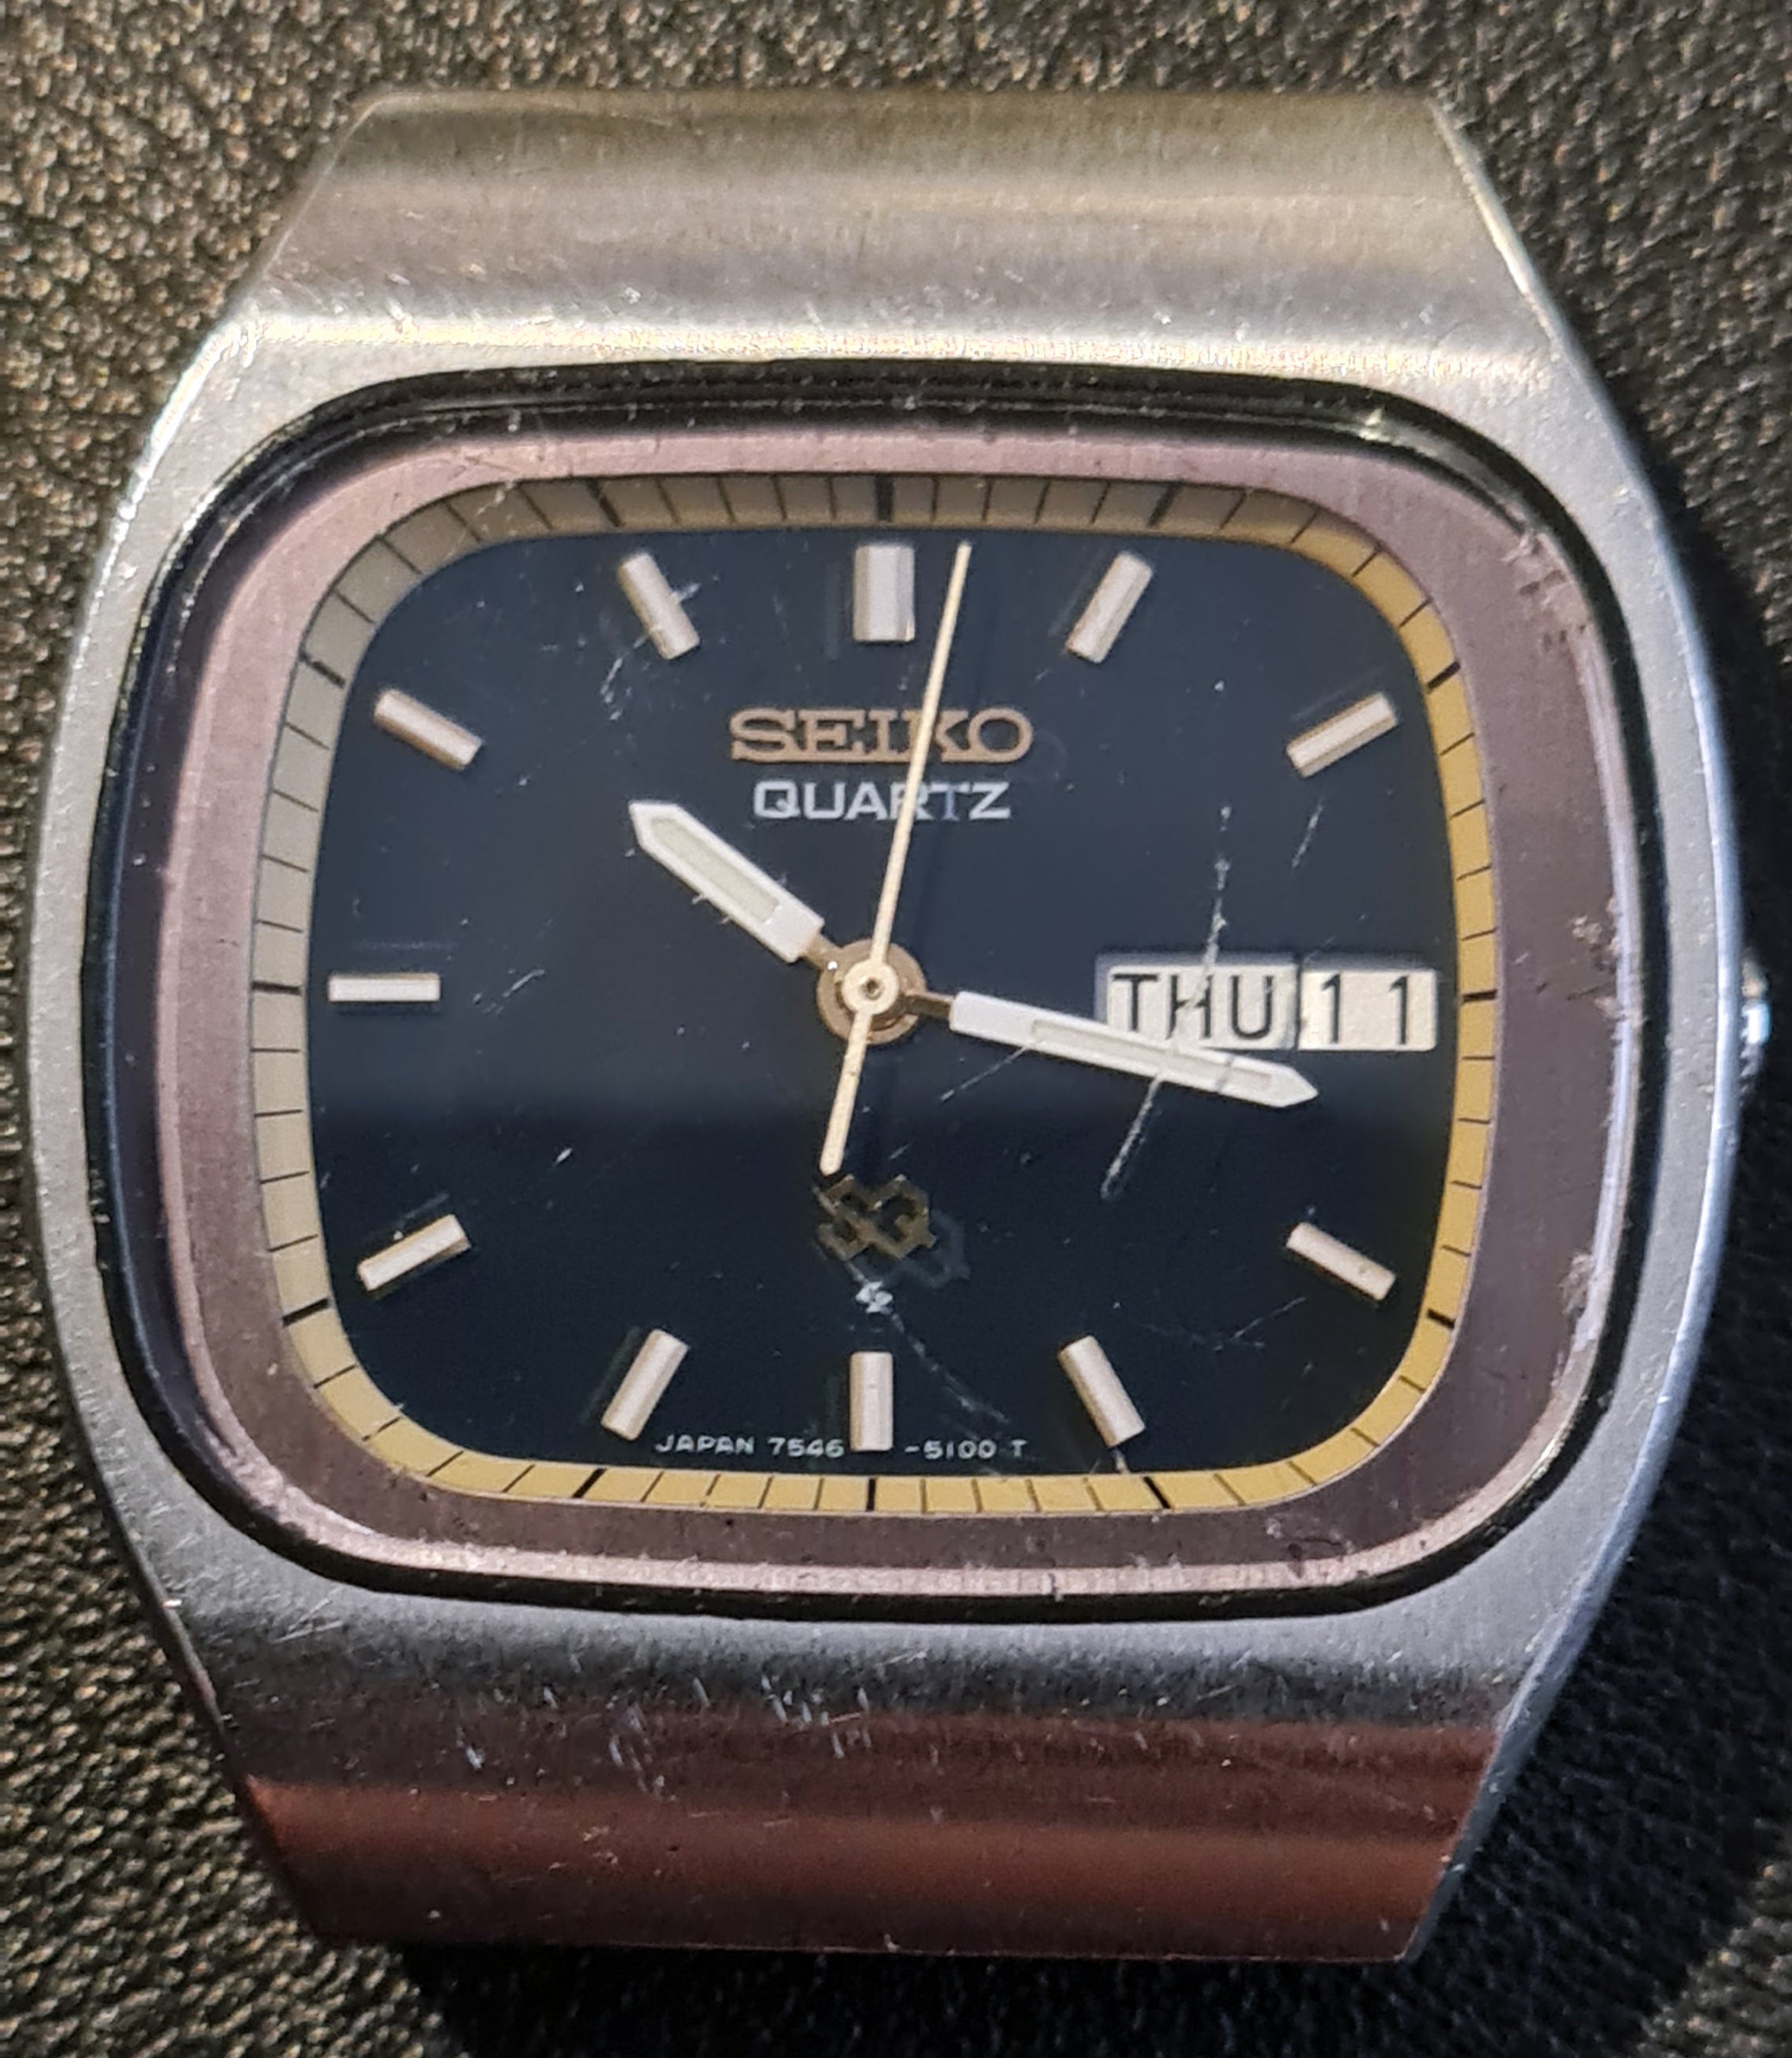 Seiko 7546-510A Watch Restoration (Circa. Apr 1979) | The Watch Site